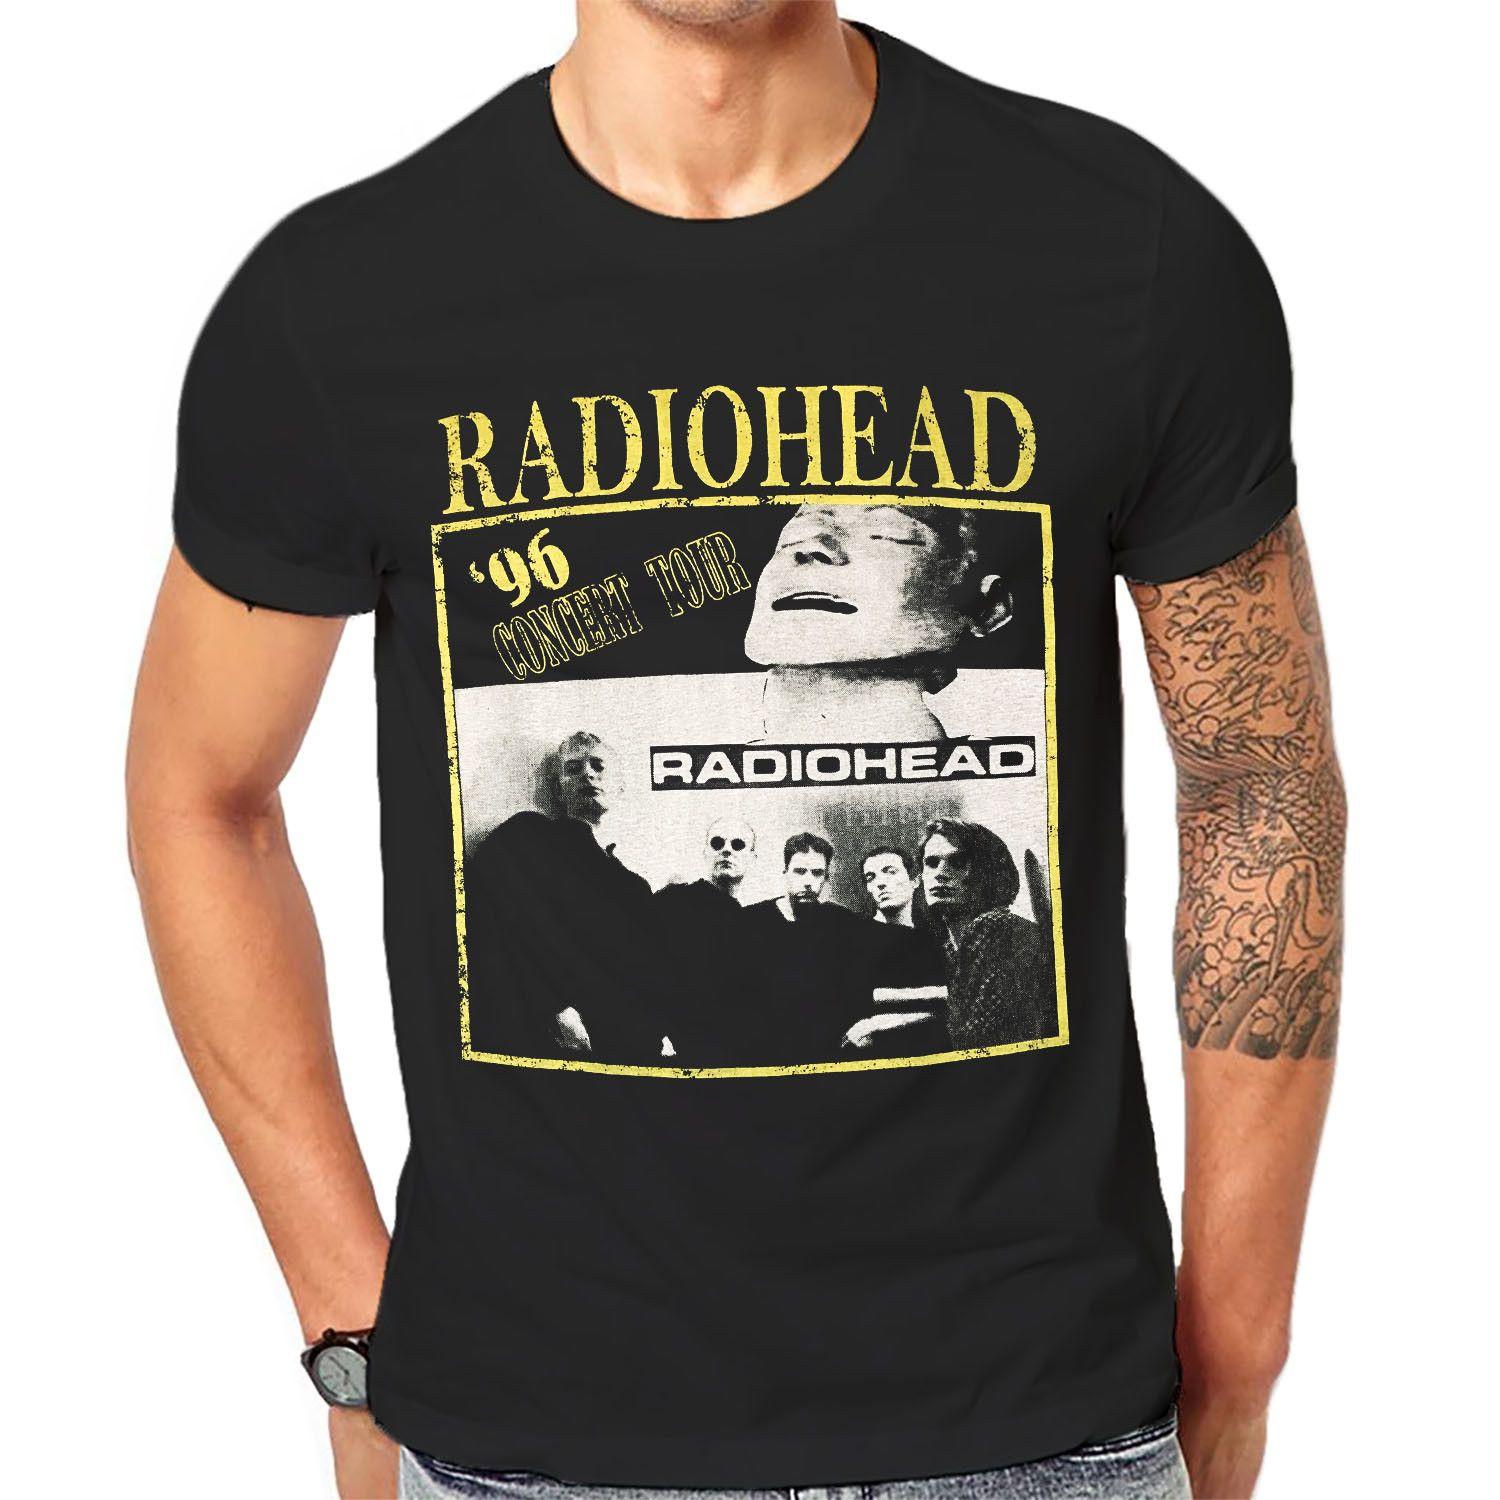 English Rock Band Logo - New Radiohead English Rock Band Logo Men/'s Black T-Shirt Size S-3XL ...